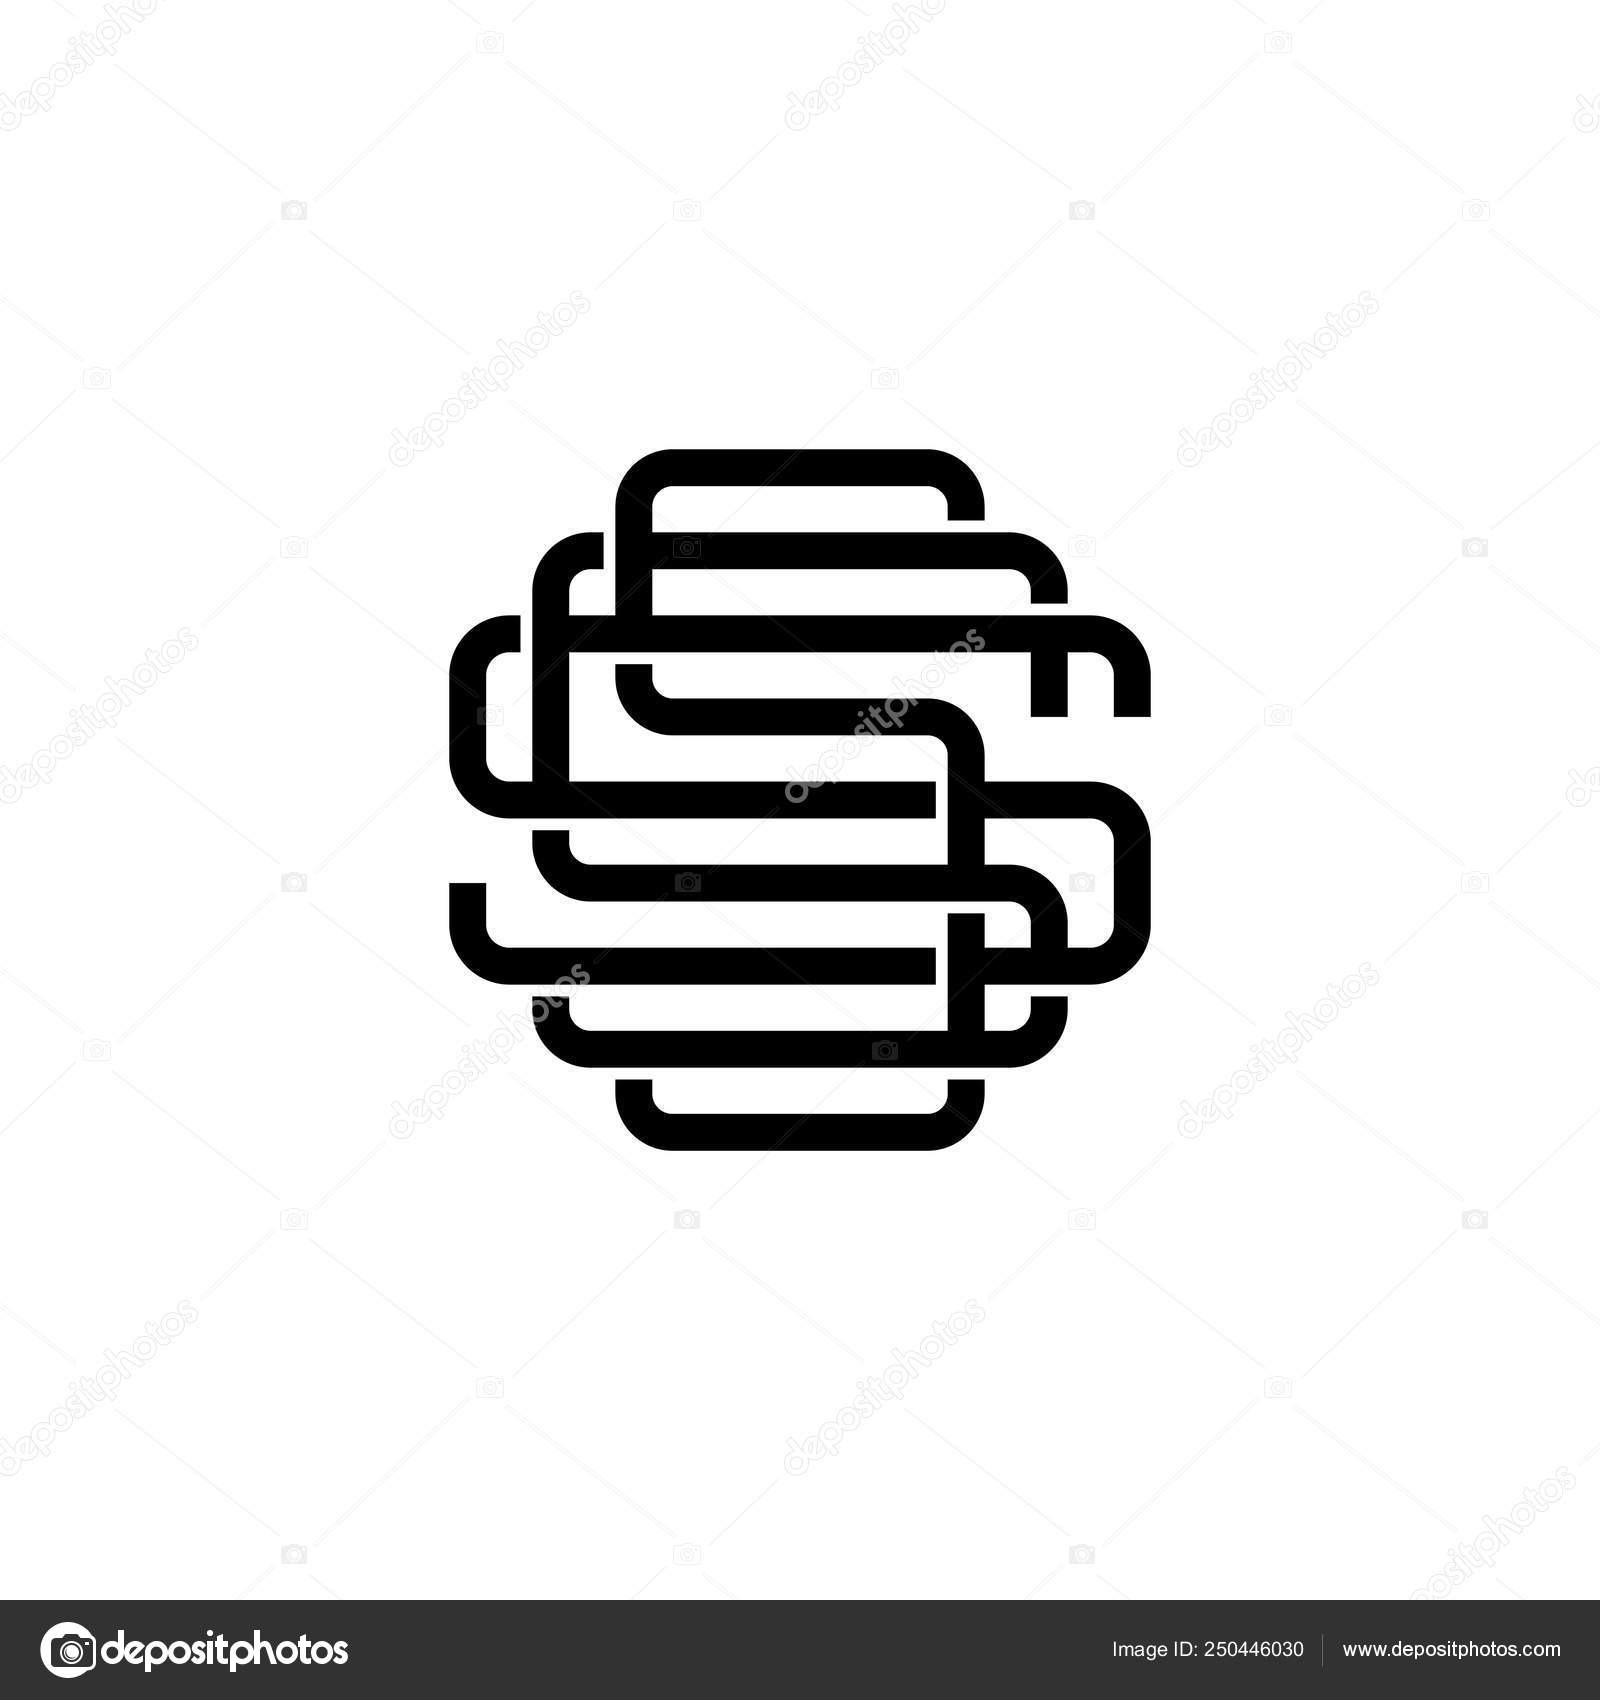 Sss letter logo design Royalty Free Vector Image